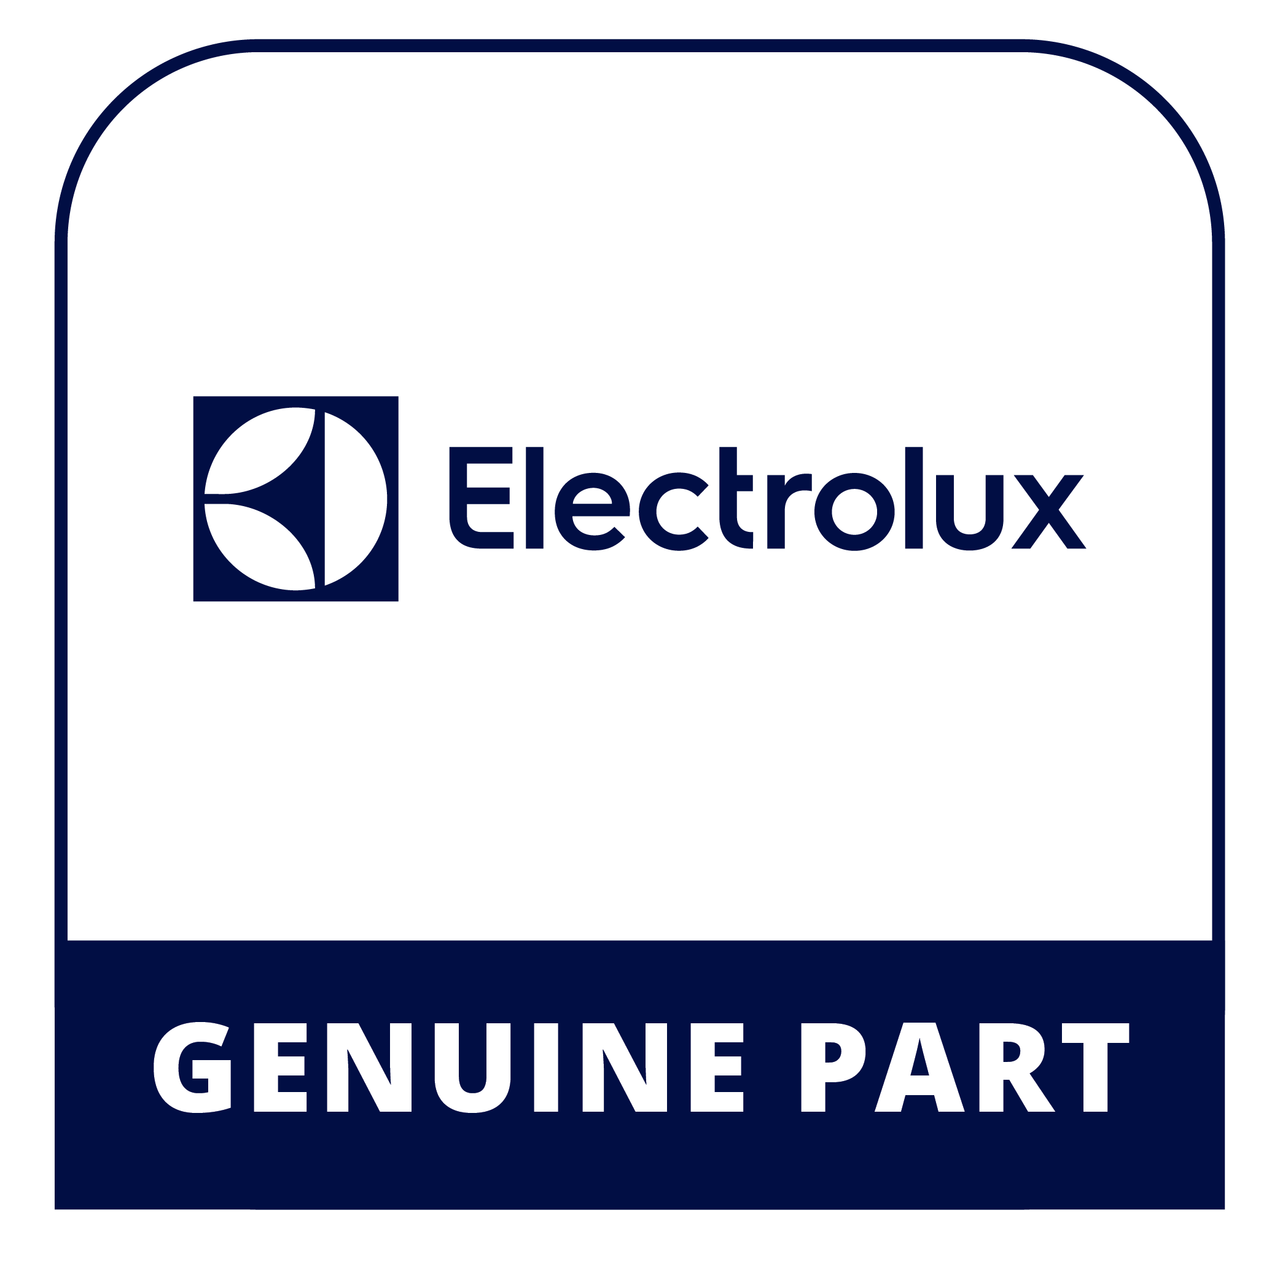 Frigidaire - Electrolux 316560156 Controller - Genuine Electrolux Part